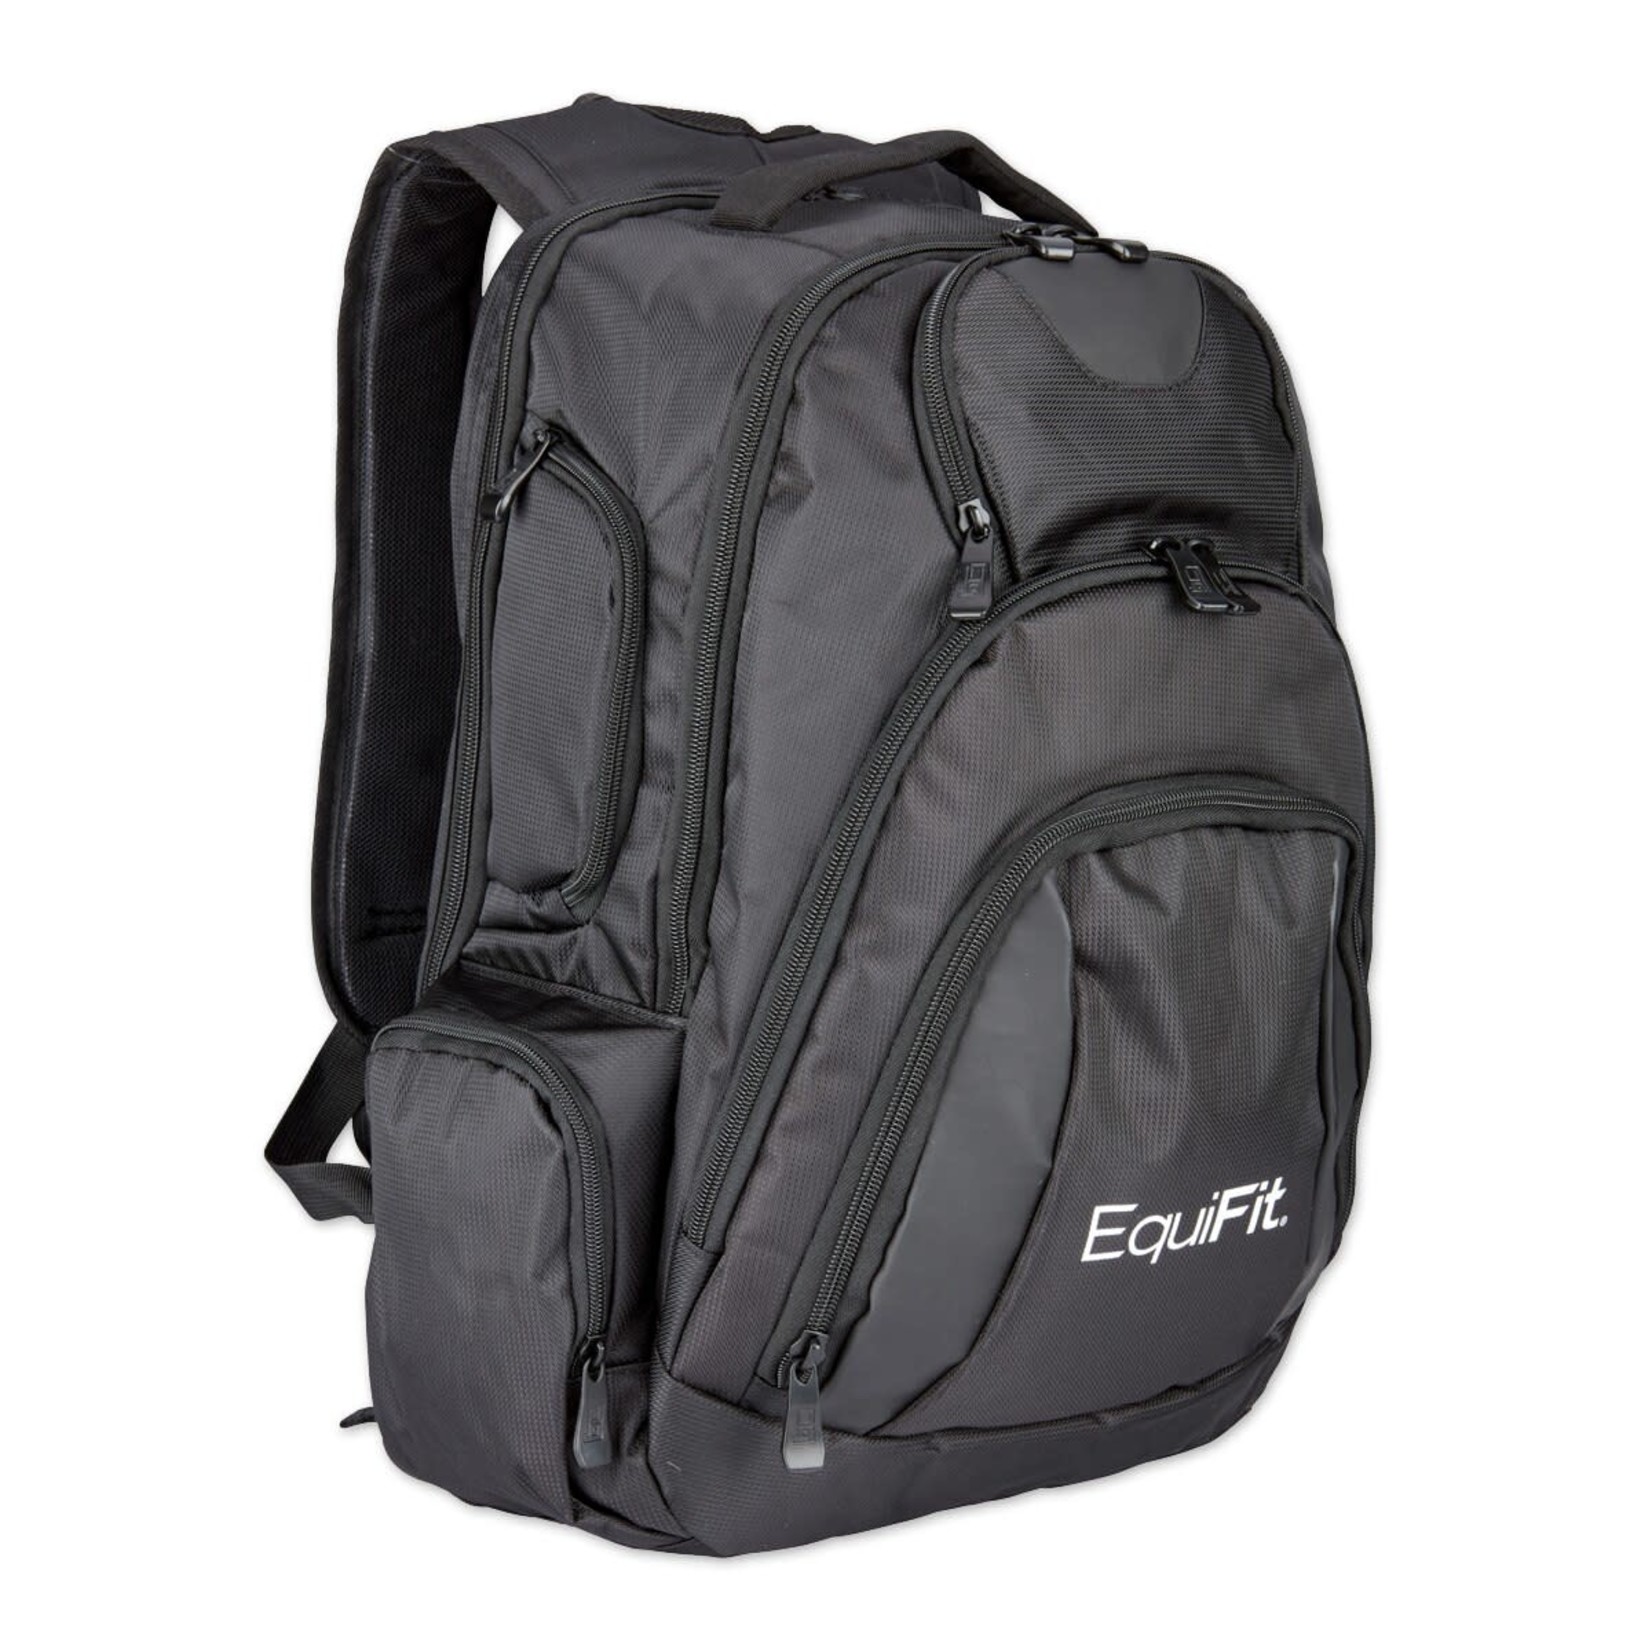 Equifit Equifit Backpack